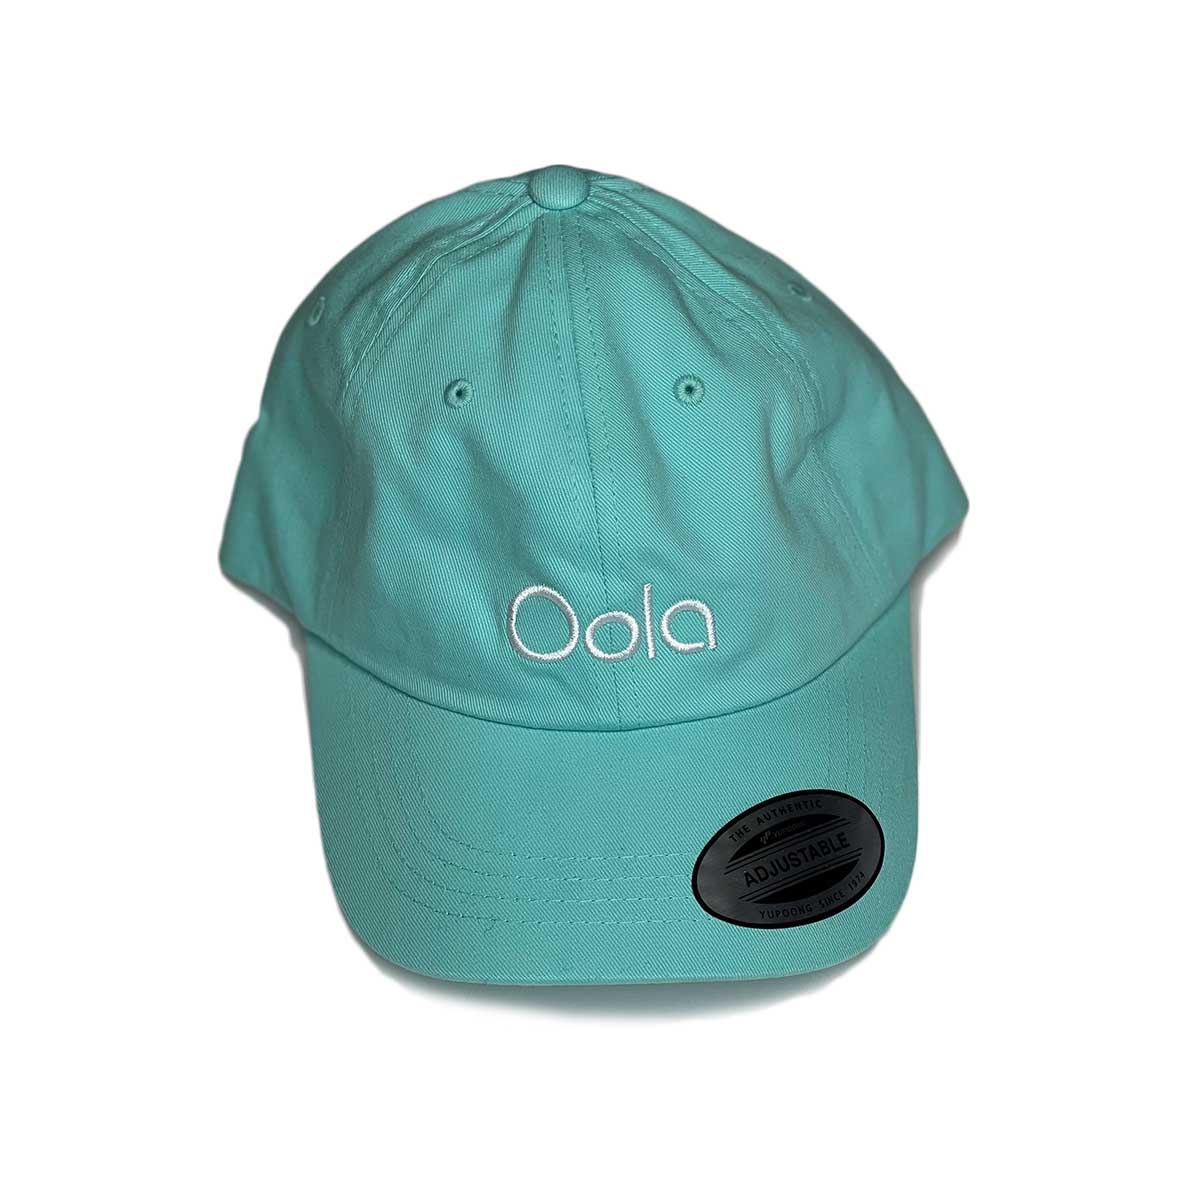 Oola Baseball Hat: Mint